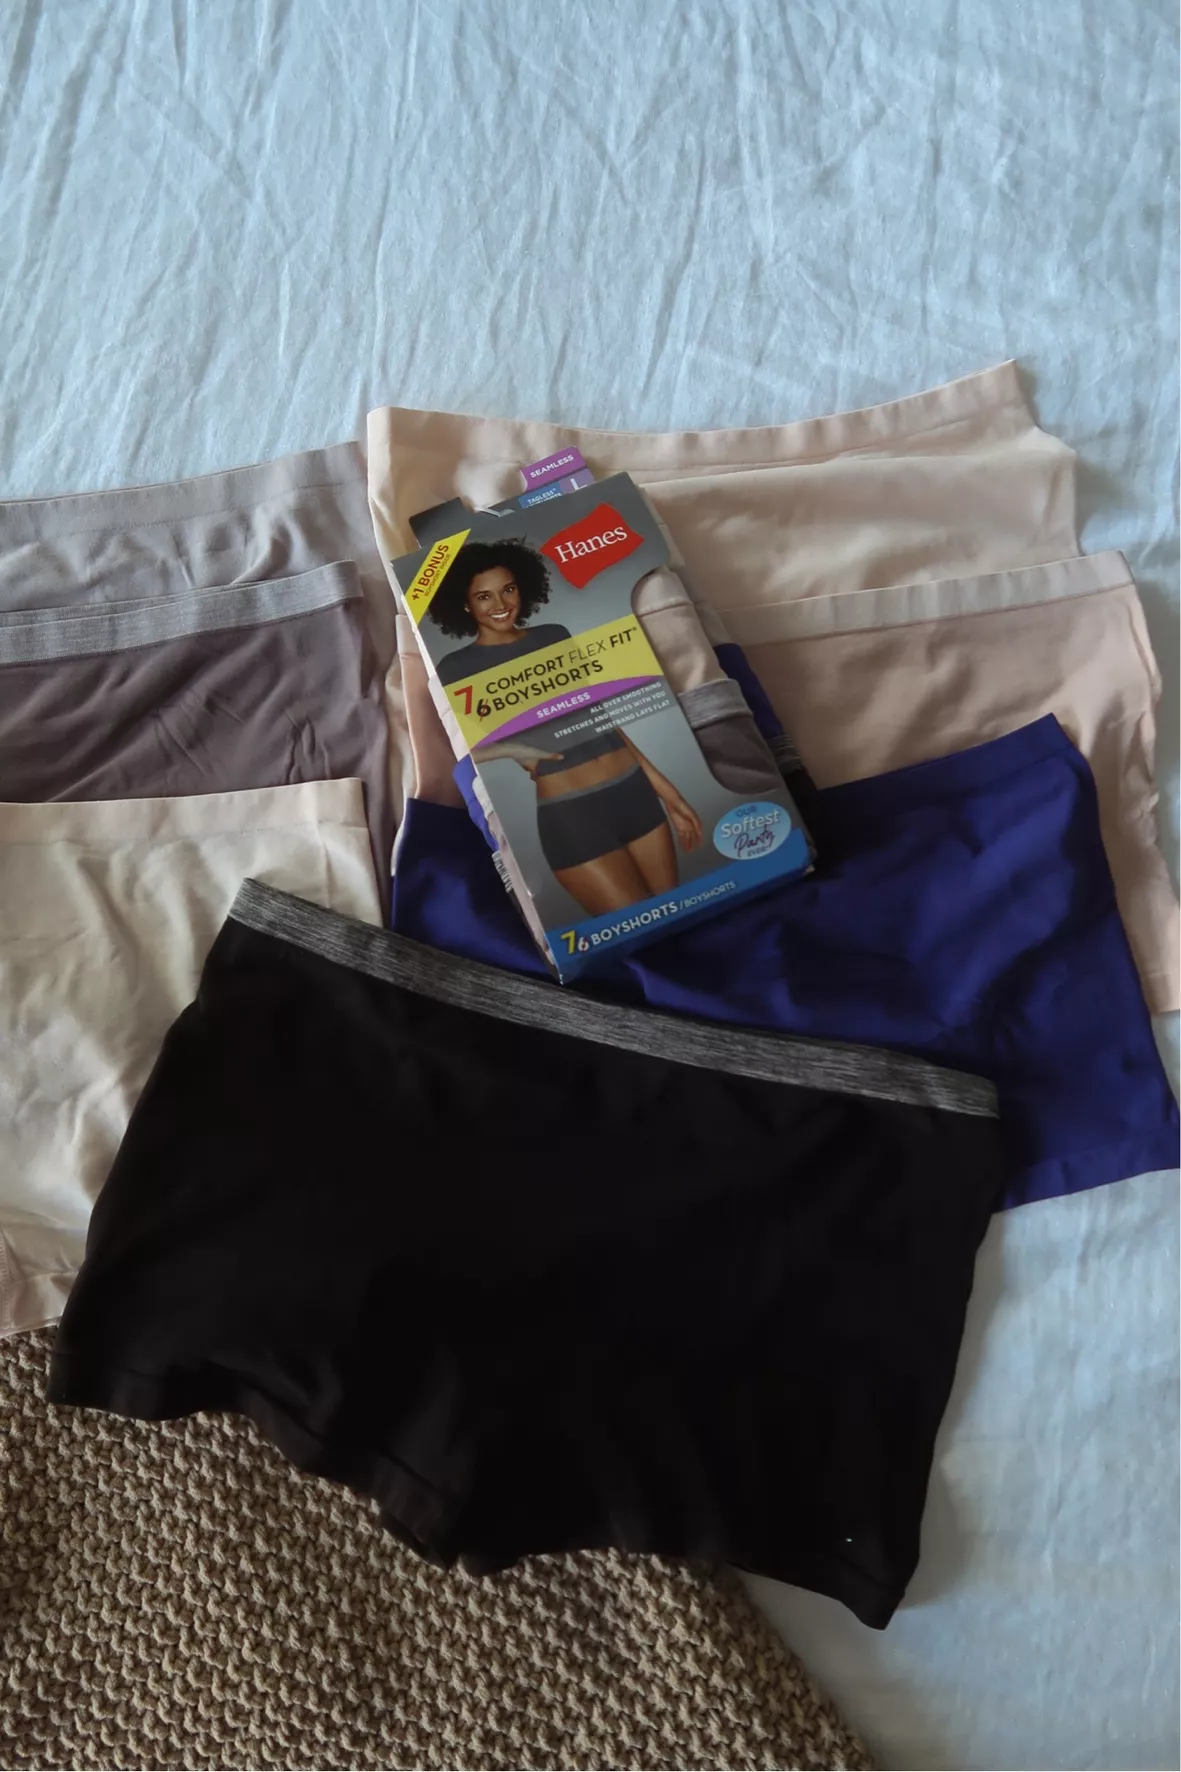 Hanes Women's 6+1 Bonus Pack Comfort Flex Fit Seamless Bikini